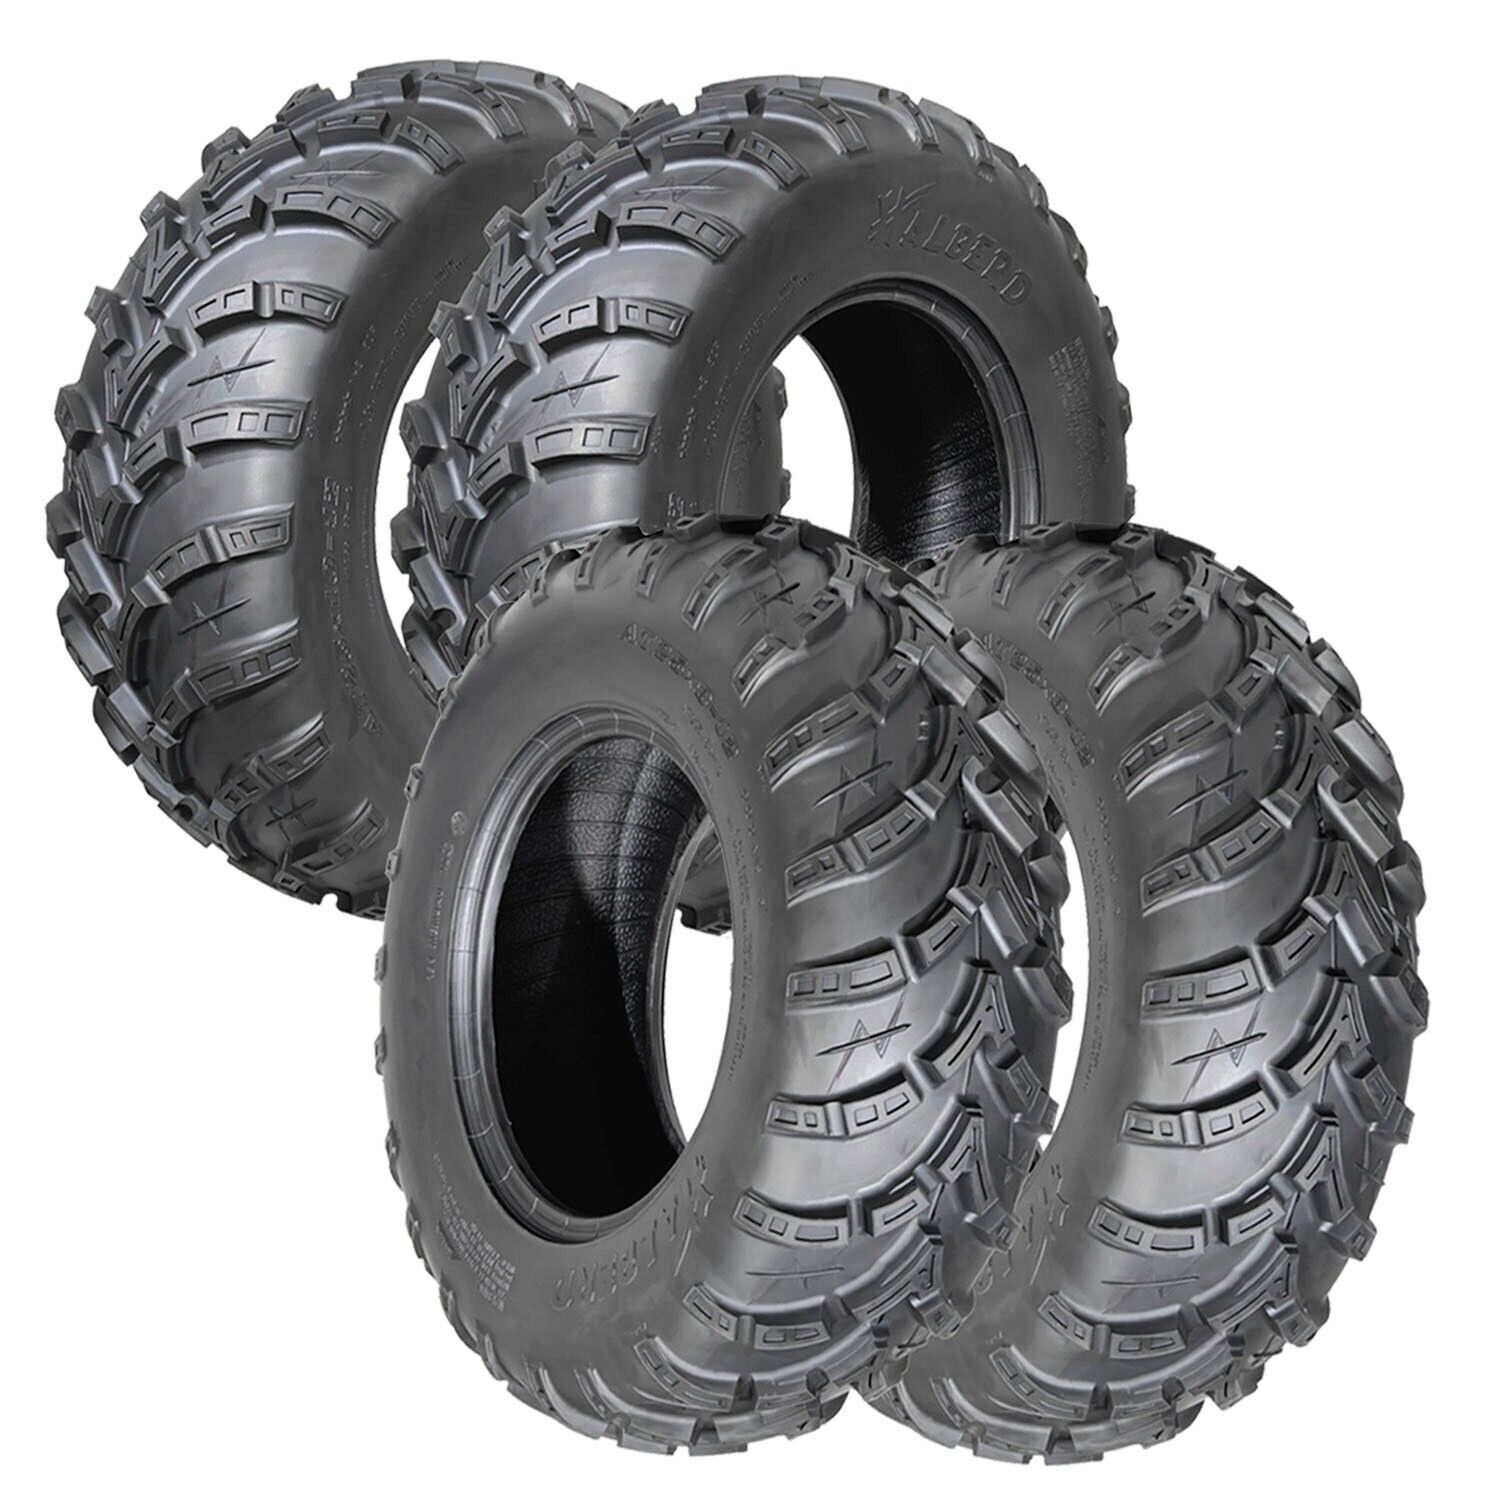 Two 25x8-12 &Two 25x10-12 ATV Tires 25x8x12 25x10x12 6Ply Mud UTV Tubeless Tyres